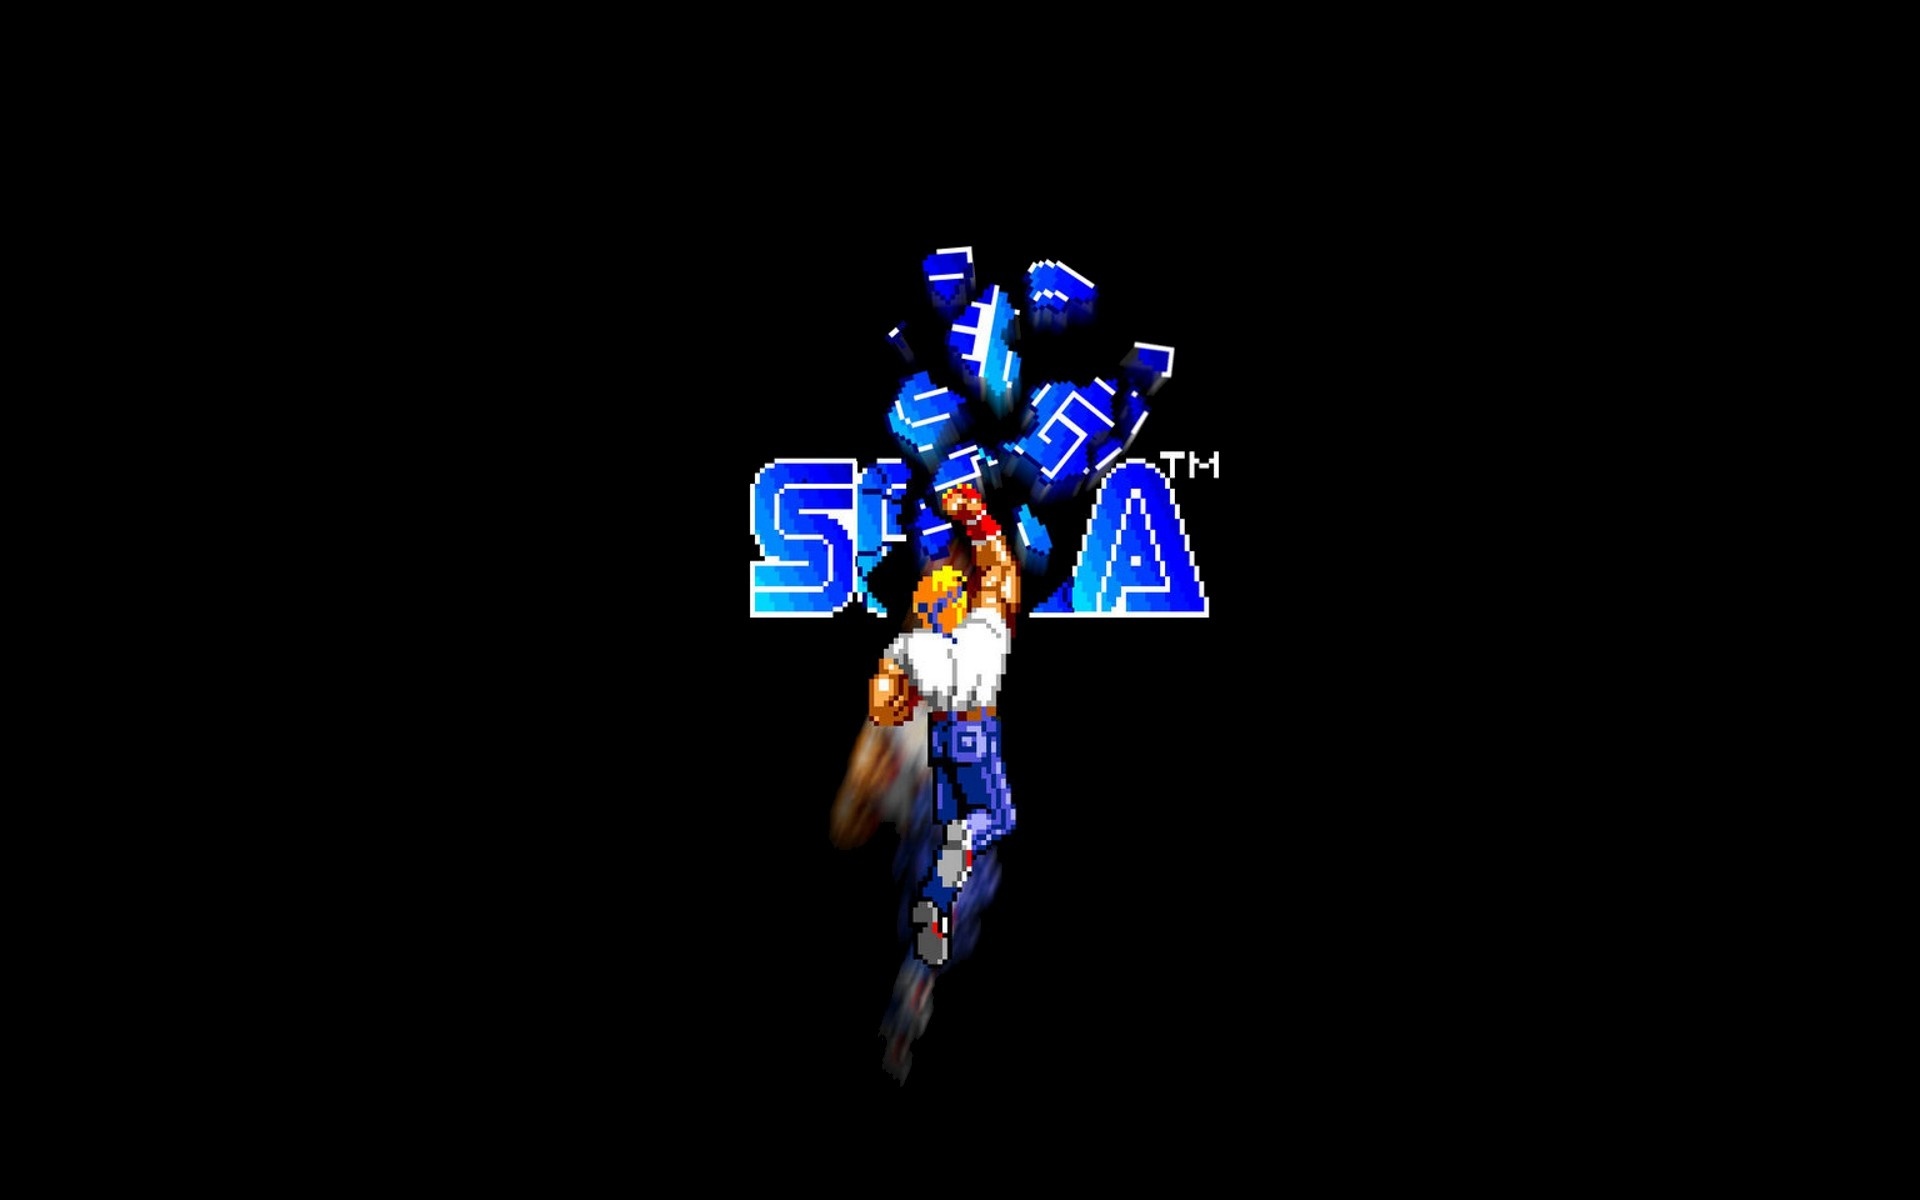 16-bit Sega Streets of Rage, Axel Stone screenshot, Sega wallpaper, Retro gaming, 1920x1200 HD Desktop